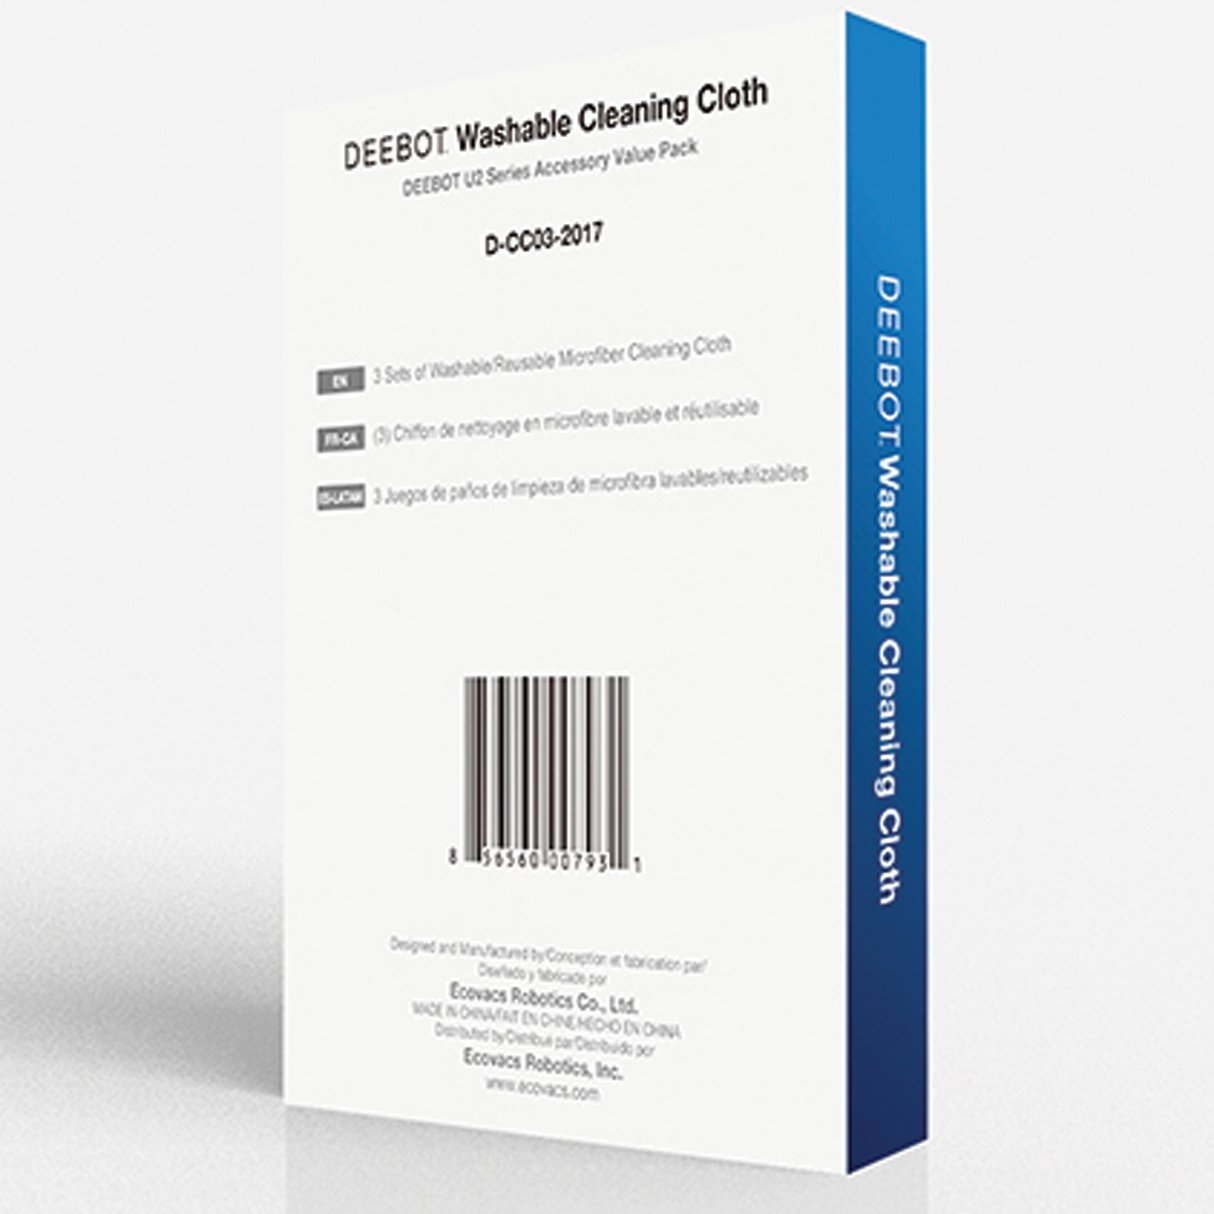 DEEBOT U2/U2 Pro Washable Cleaning Cloths - 3 Mopping Cloths